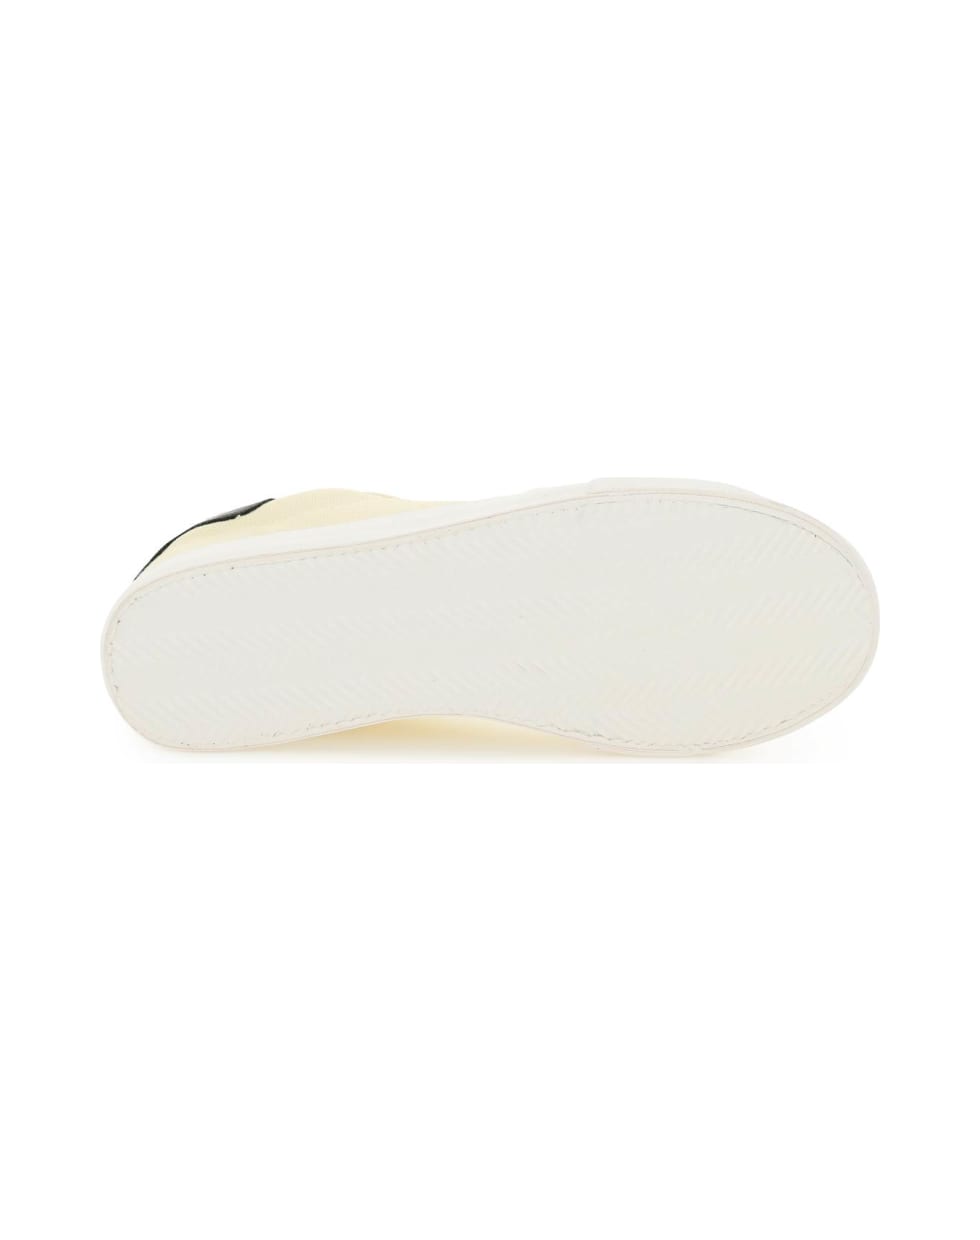 HERON PRESTON Vulcanized Low Top Canvas Sneakers - CREAM WHITE (White)